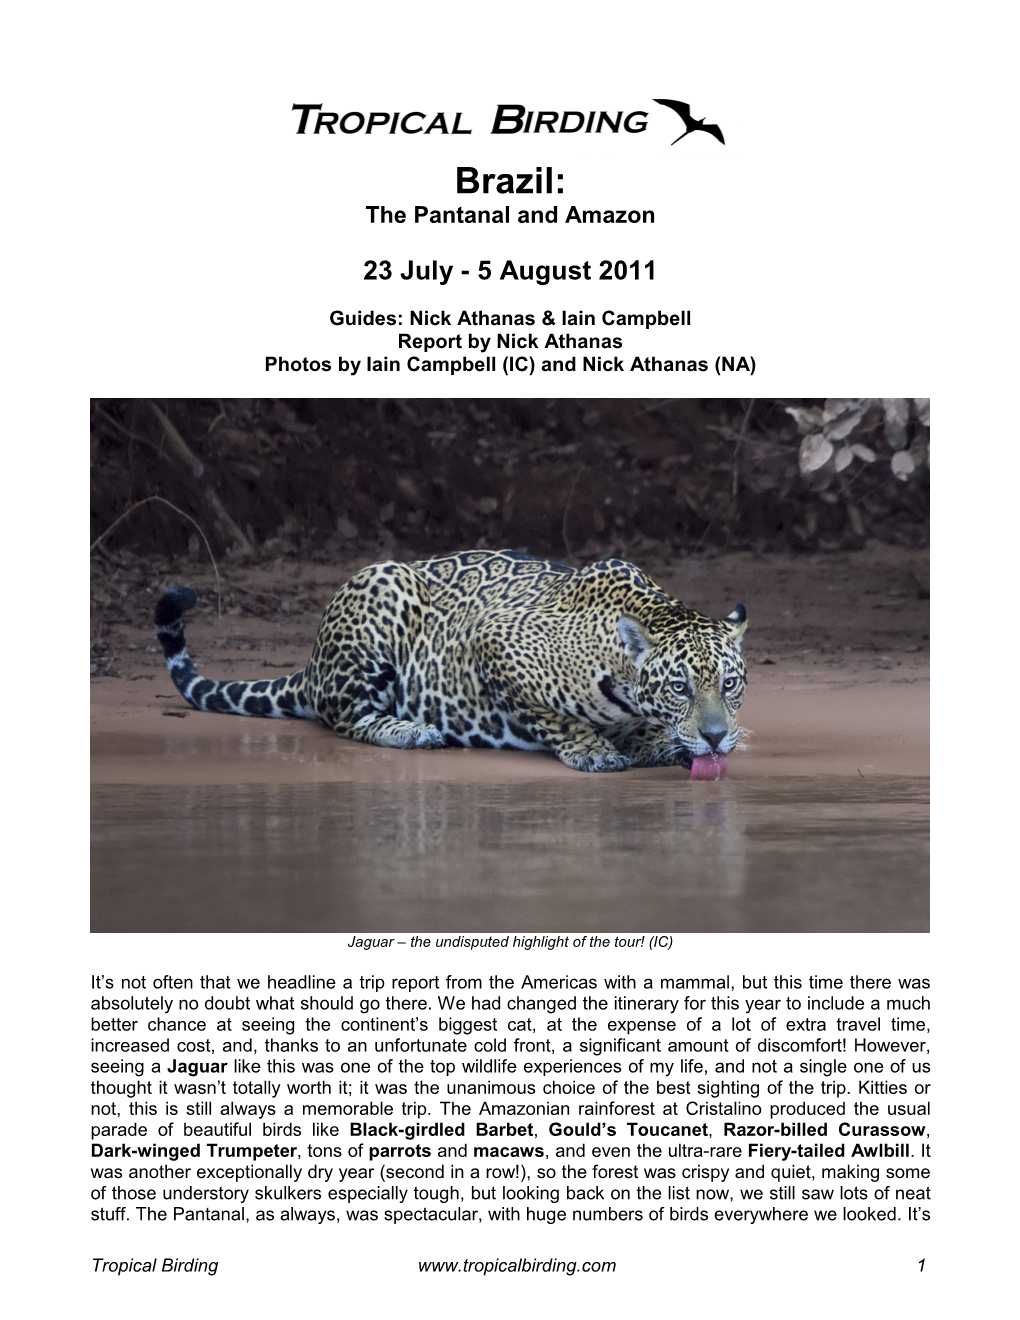 Tropical Birding, Brazil, the Pantanal and Amazon, Jul-Aug 2011